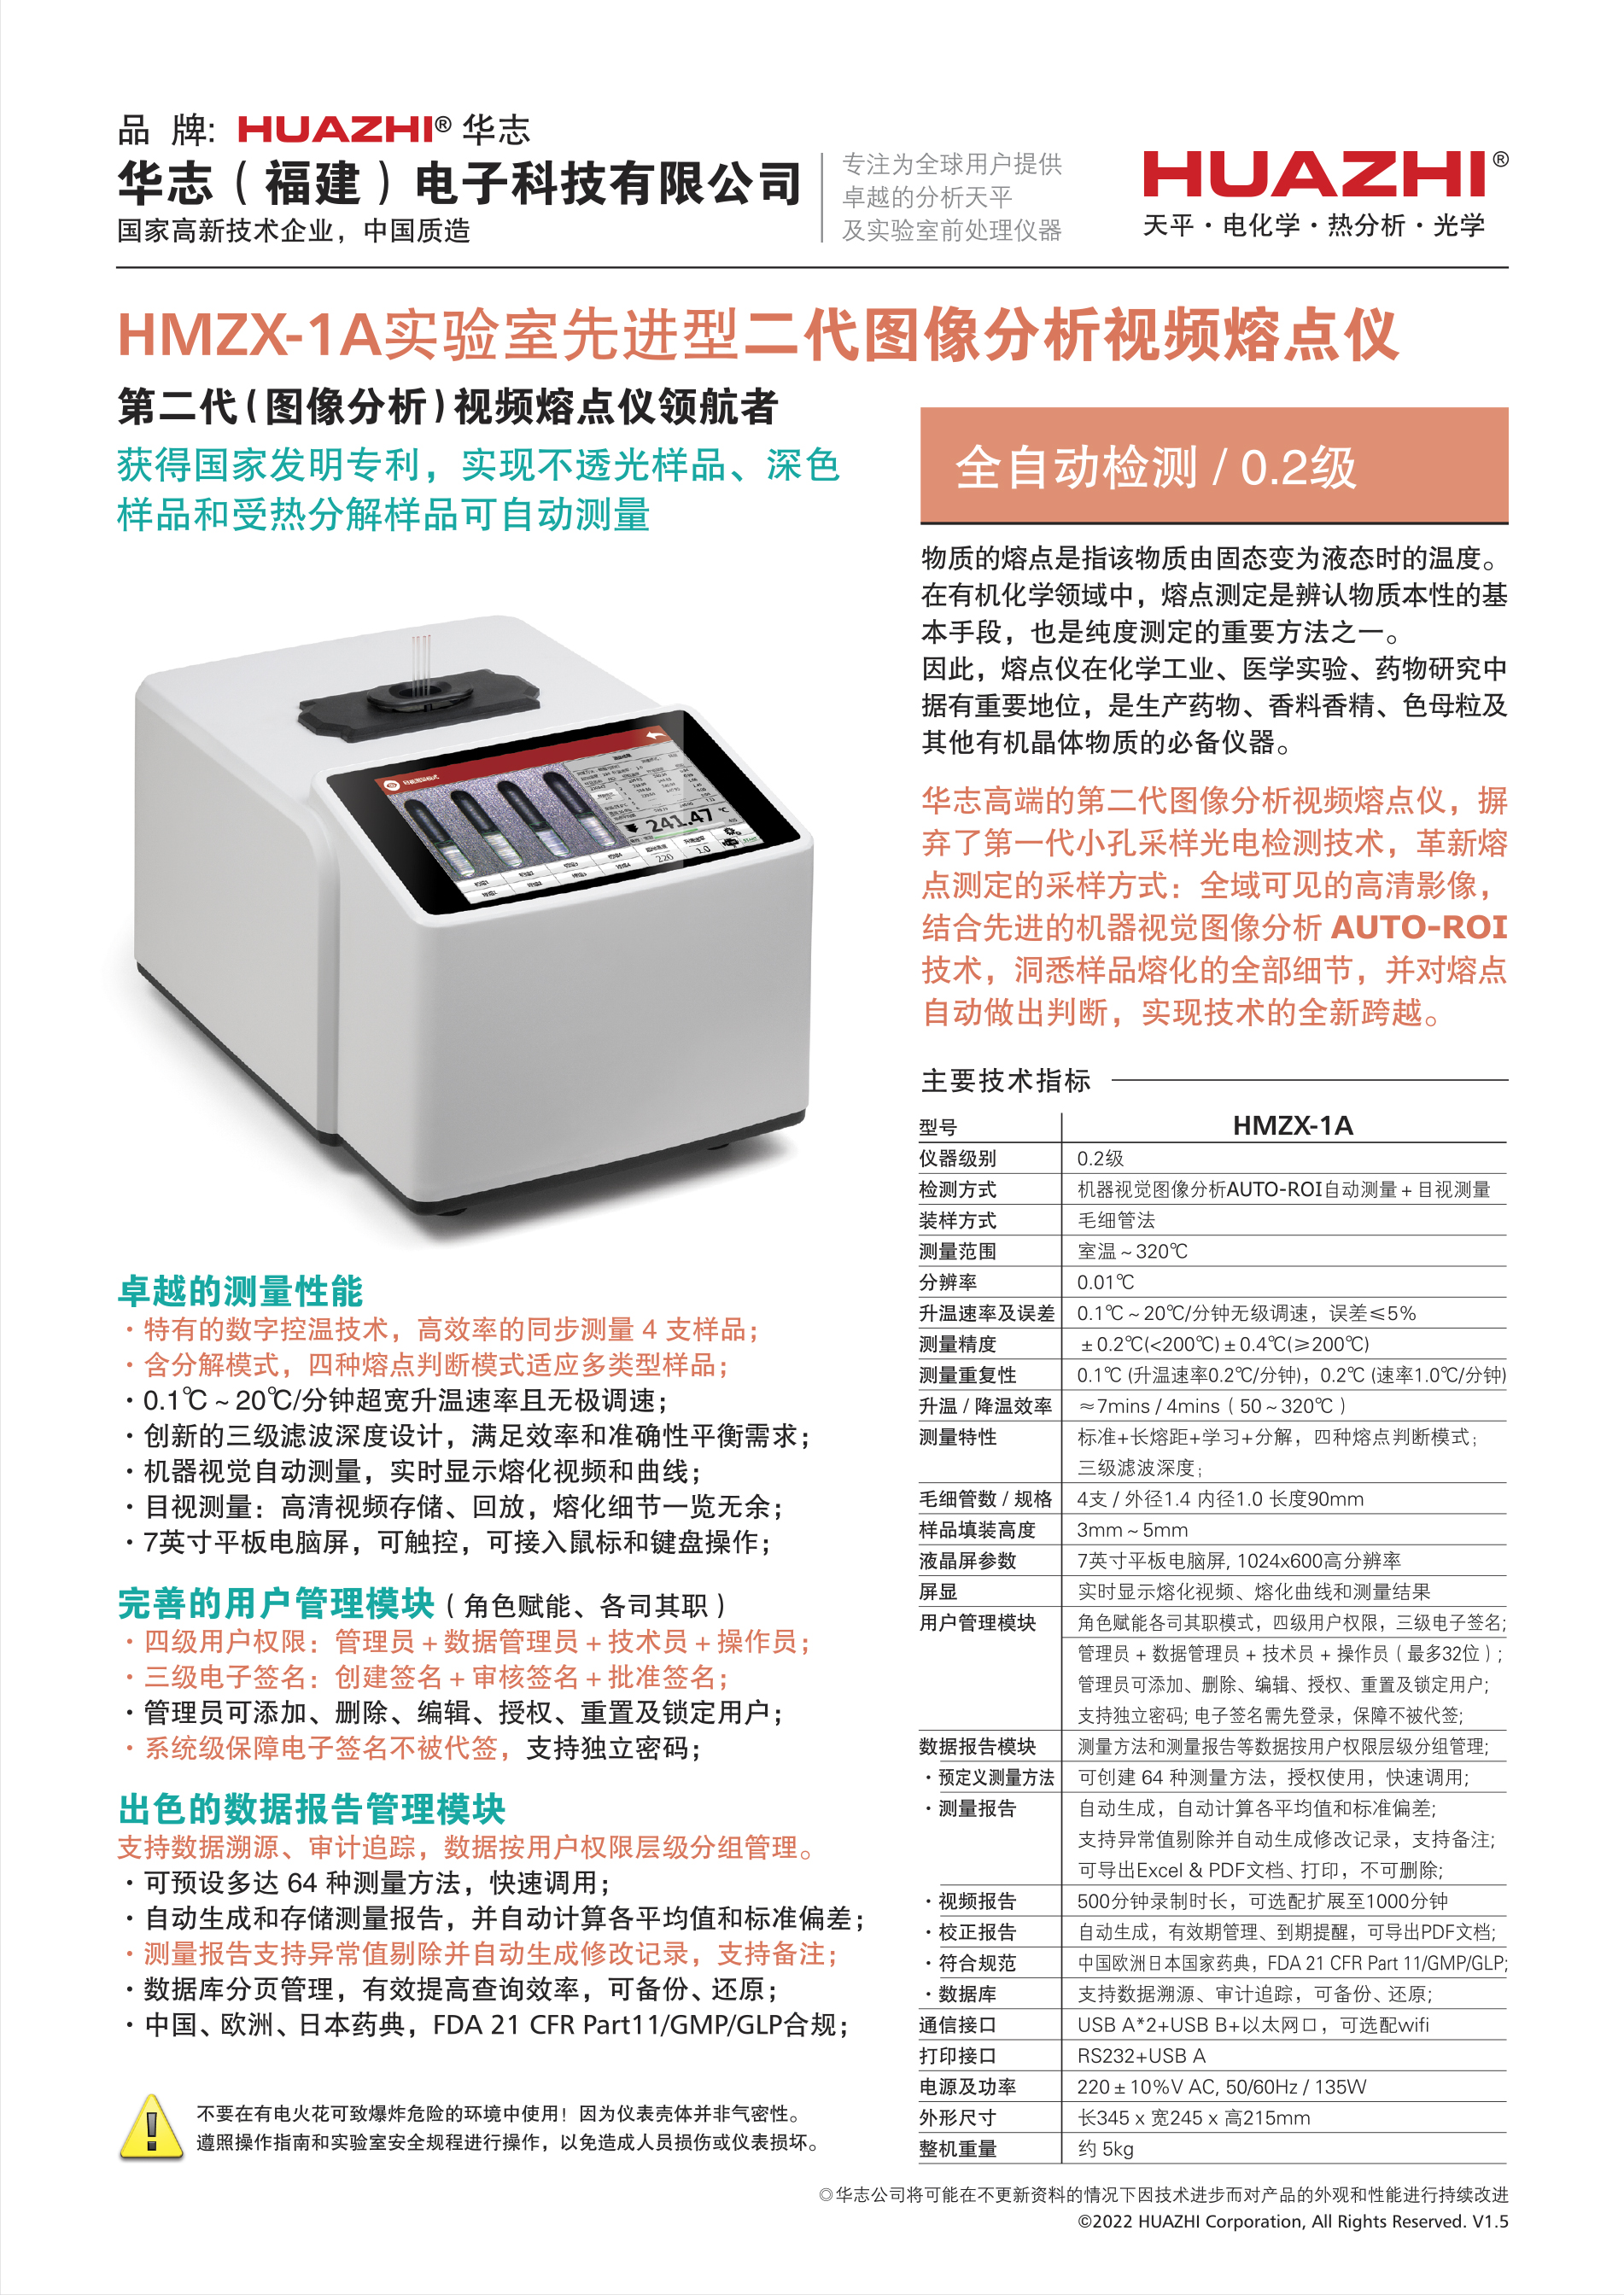 HMZX-1A二代視頻熔點儀單機詳情(中文v1.5).jpg